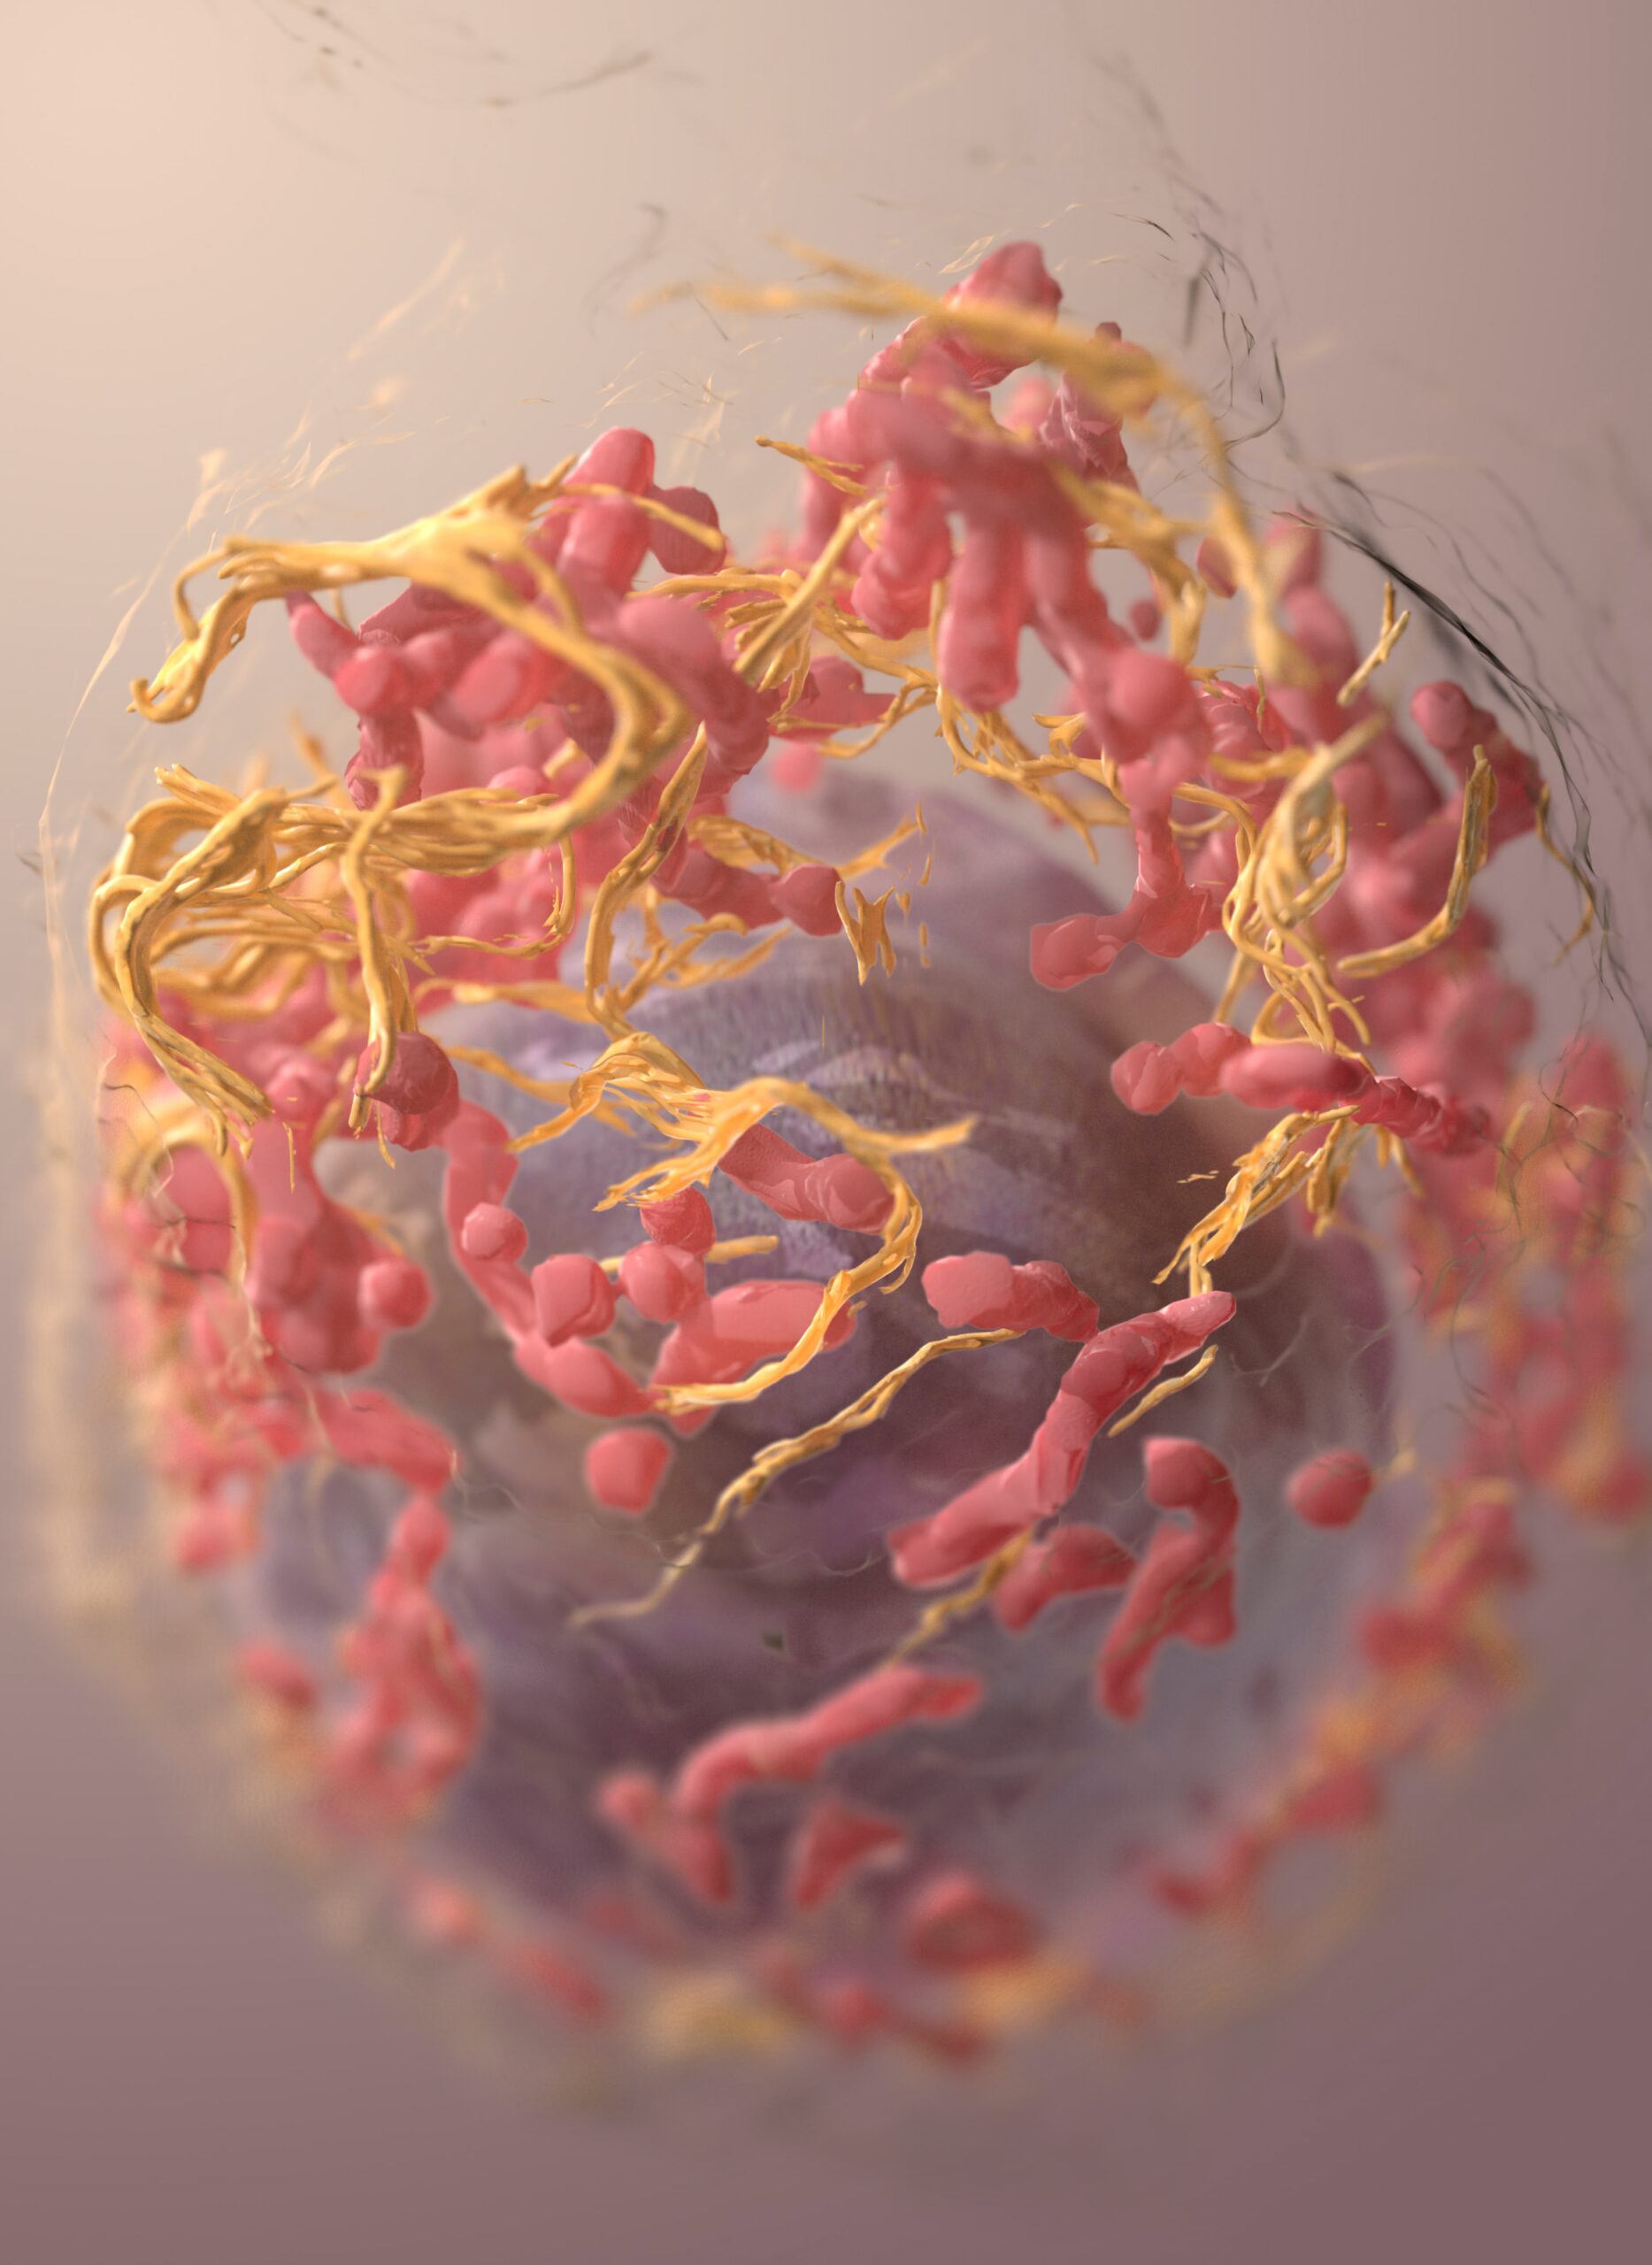 Células madre de cordón umbilical, modificadas genéticamente, para luchar contra el cáncer